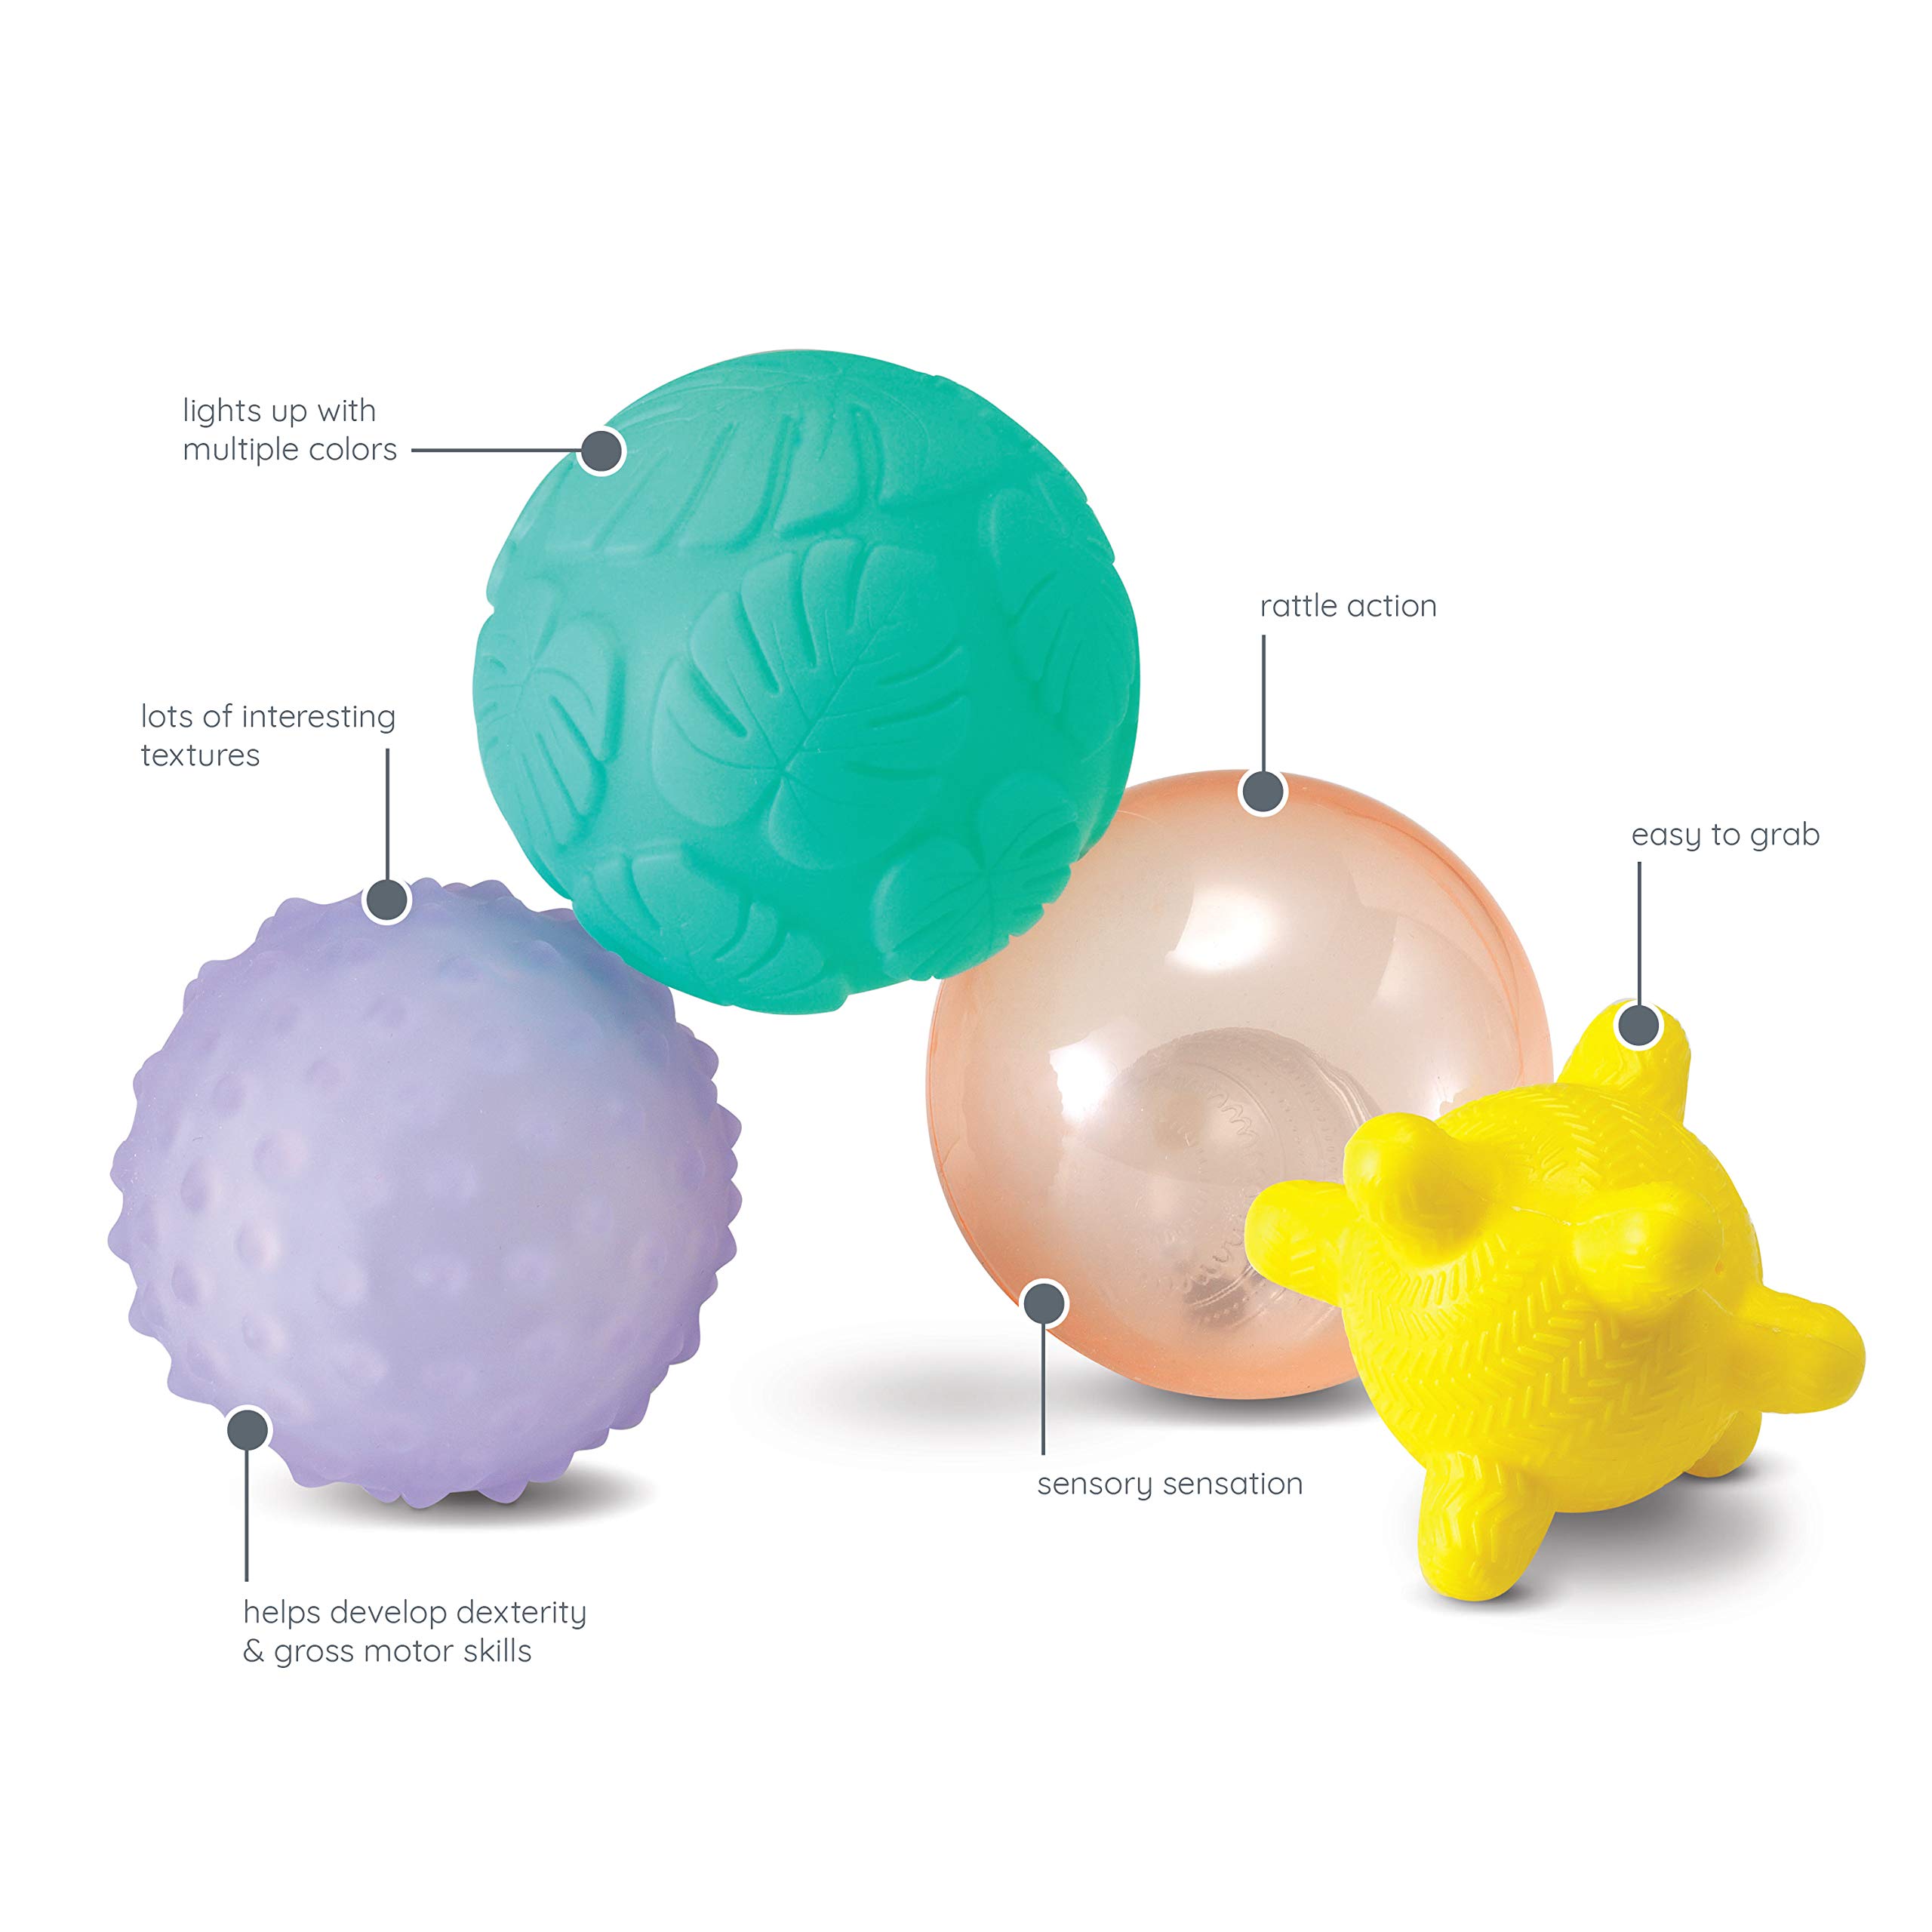 Infantino Activity Ball Set Music & Lights - 4 Colorful, Bouncy, & Multi-Textured Balls for Fine Motor Development for Little Hands